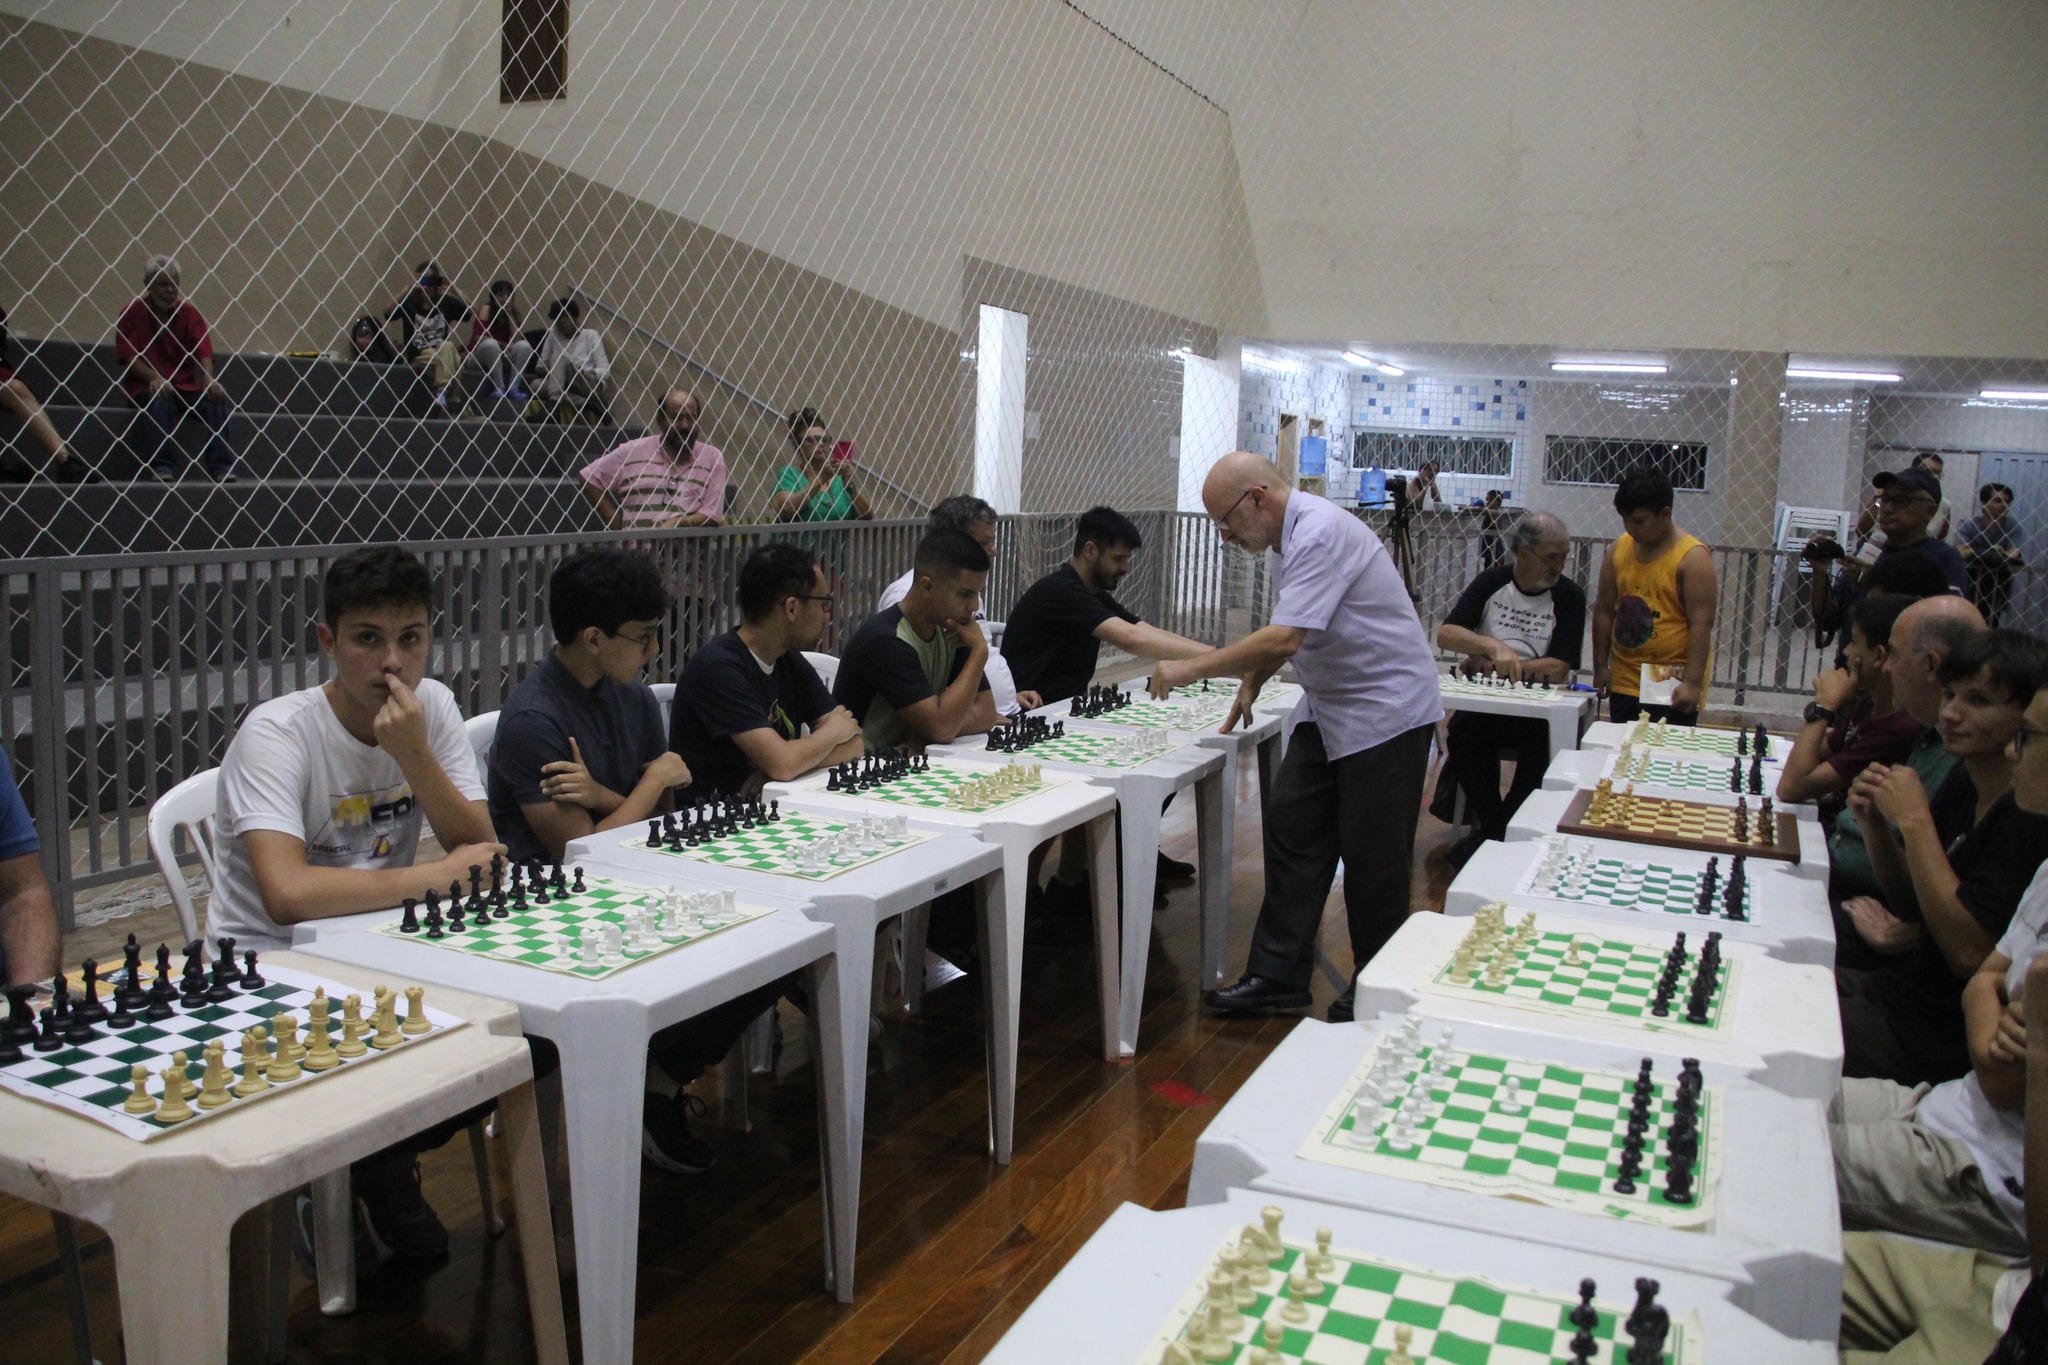 Estudante vence mestre internacional de xadrez